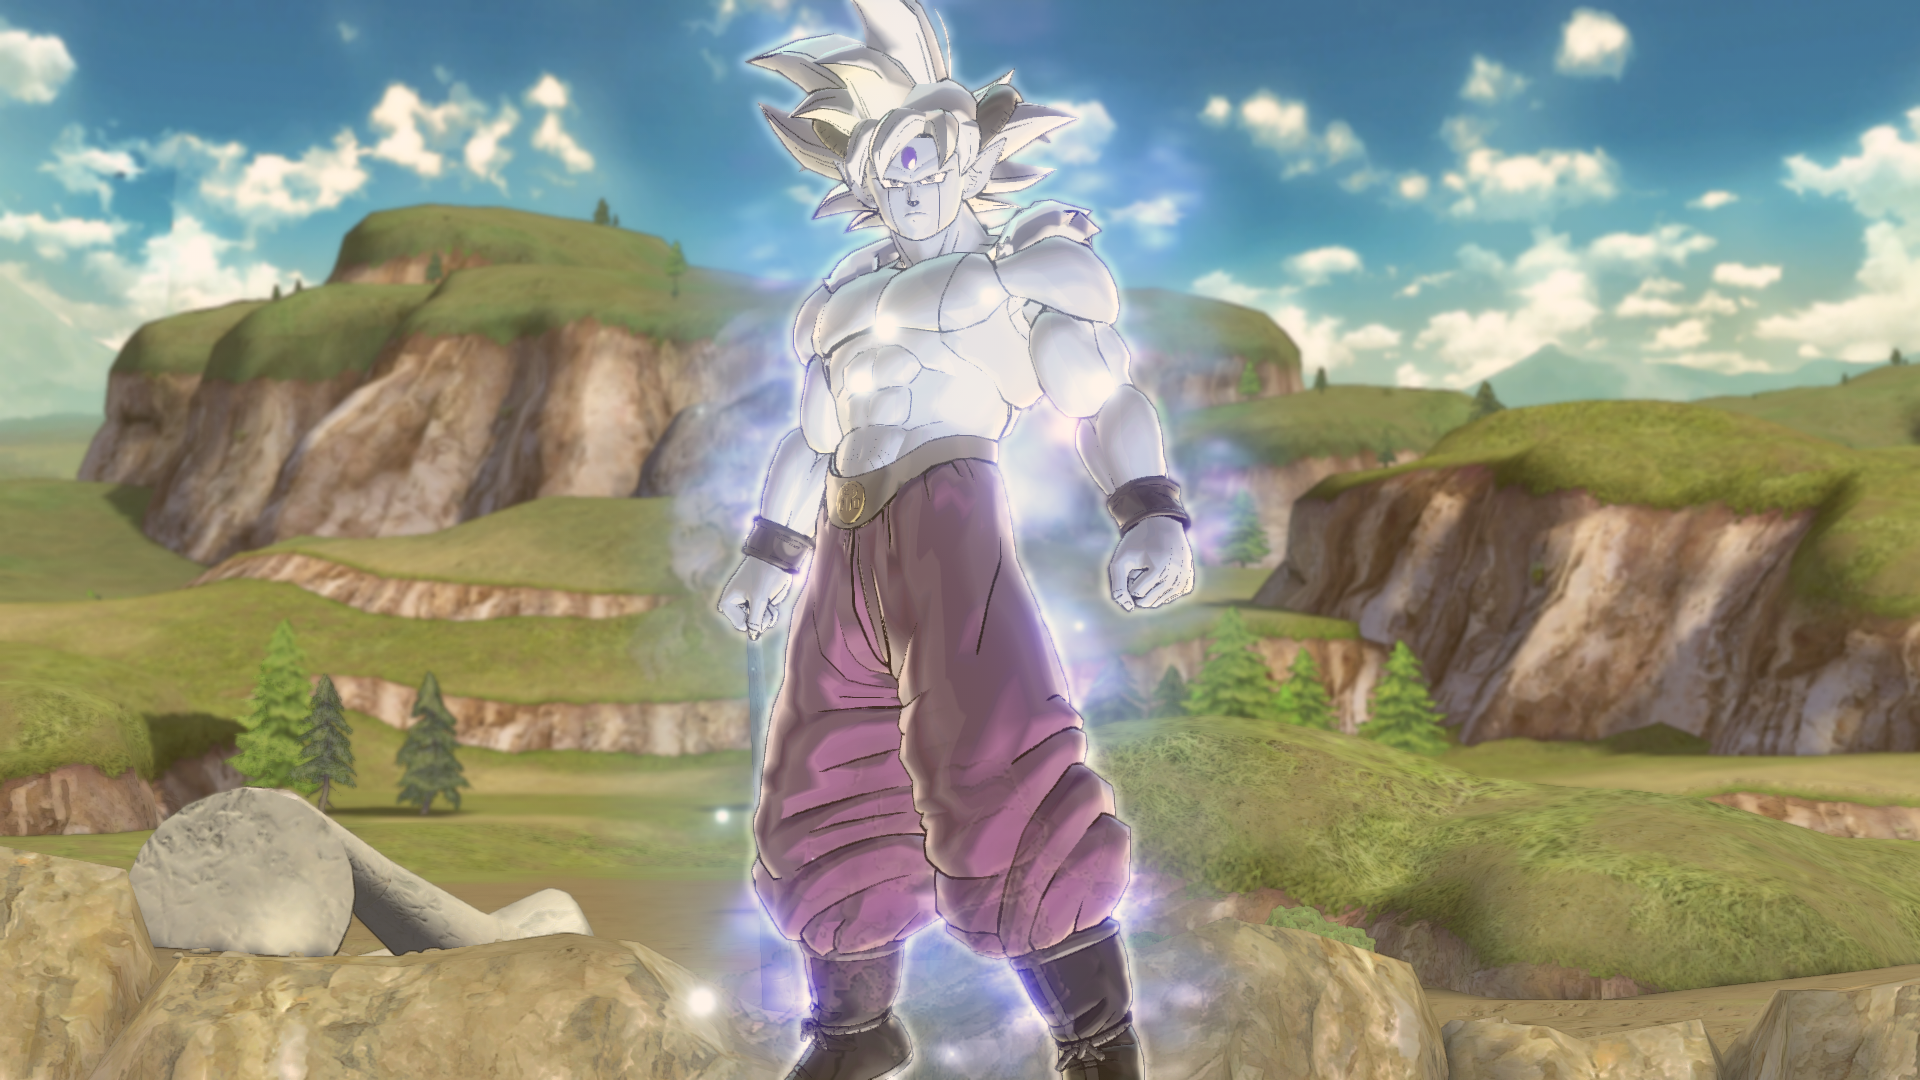 The Ultimate Lifeform: Moro (Absorbed Goku)